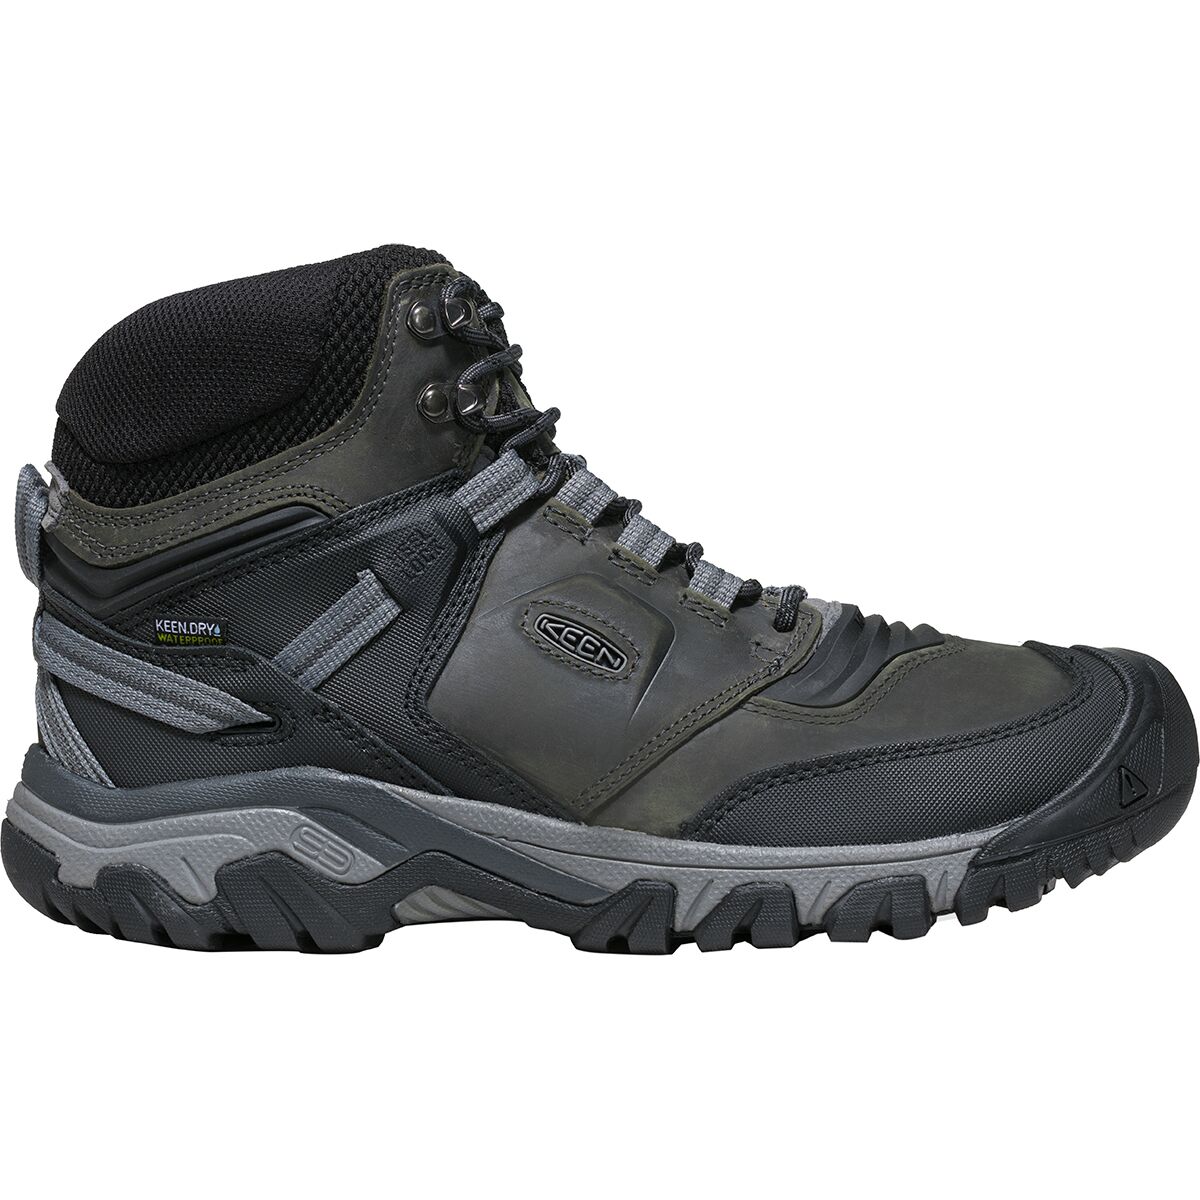 Ridge Flex Mid WP Hiking Boot - Men